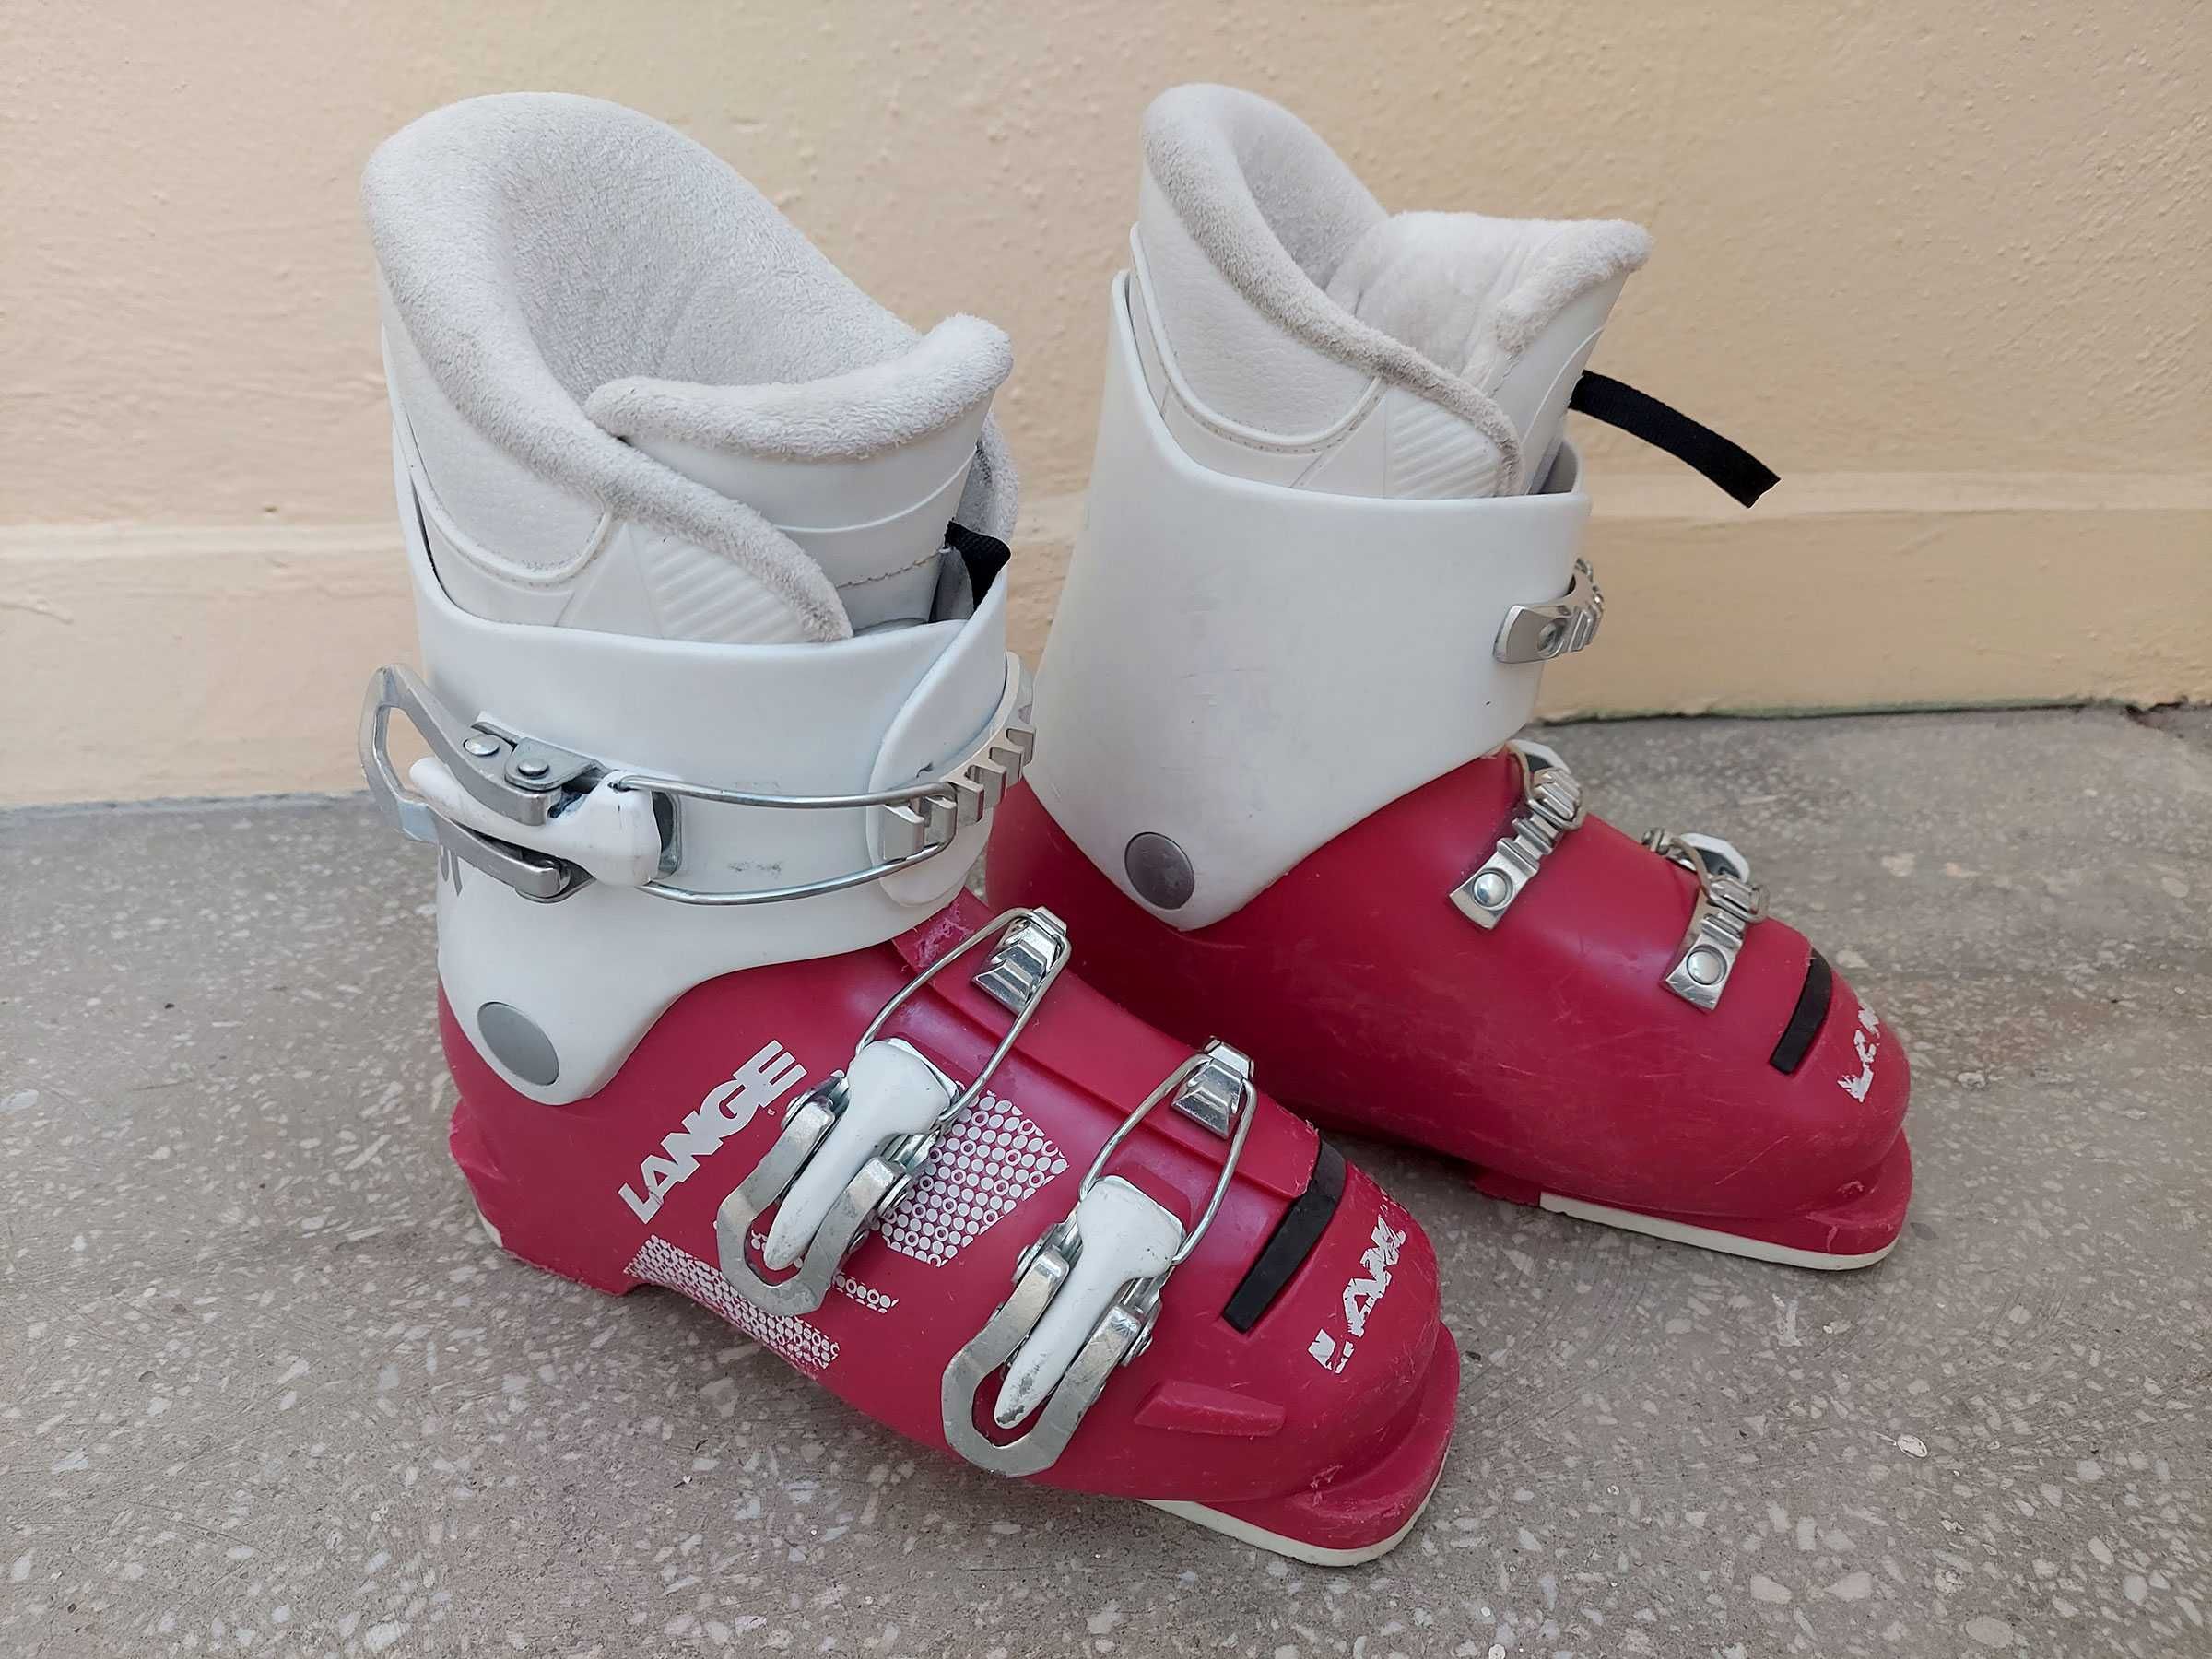 Buty narciarskie Lange Starlet 50 rozmiar 20-20,5